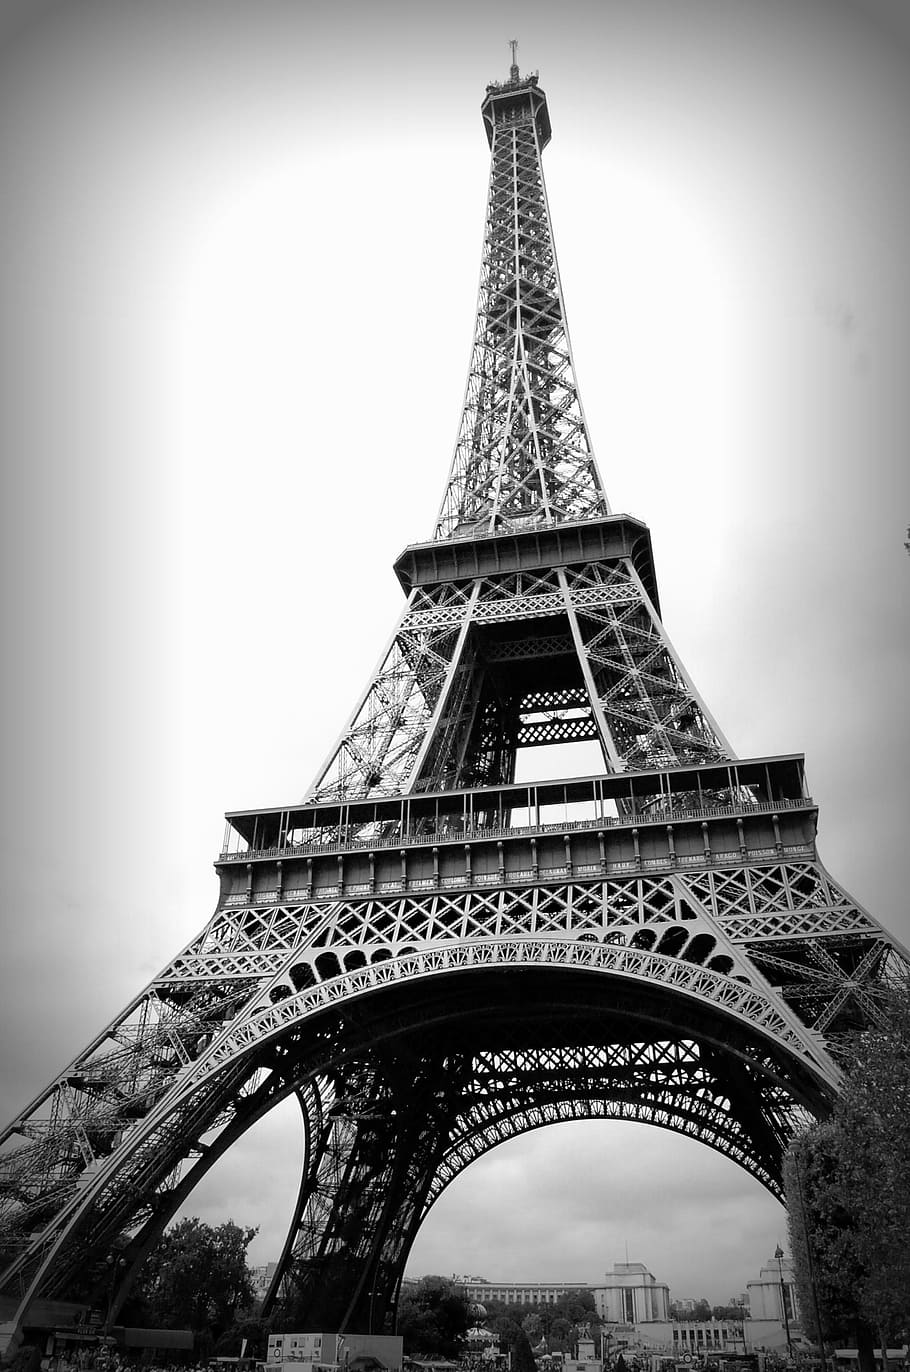 menara eiffel, wisata eiffel, france, paris, menara, arsitektur, struktur yang dibangun, tinggi - tinggi, sejarah, pariwisata